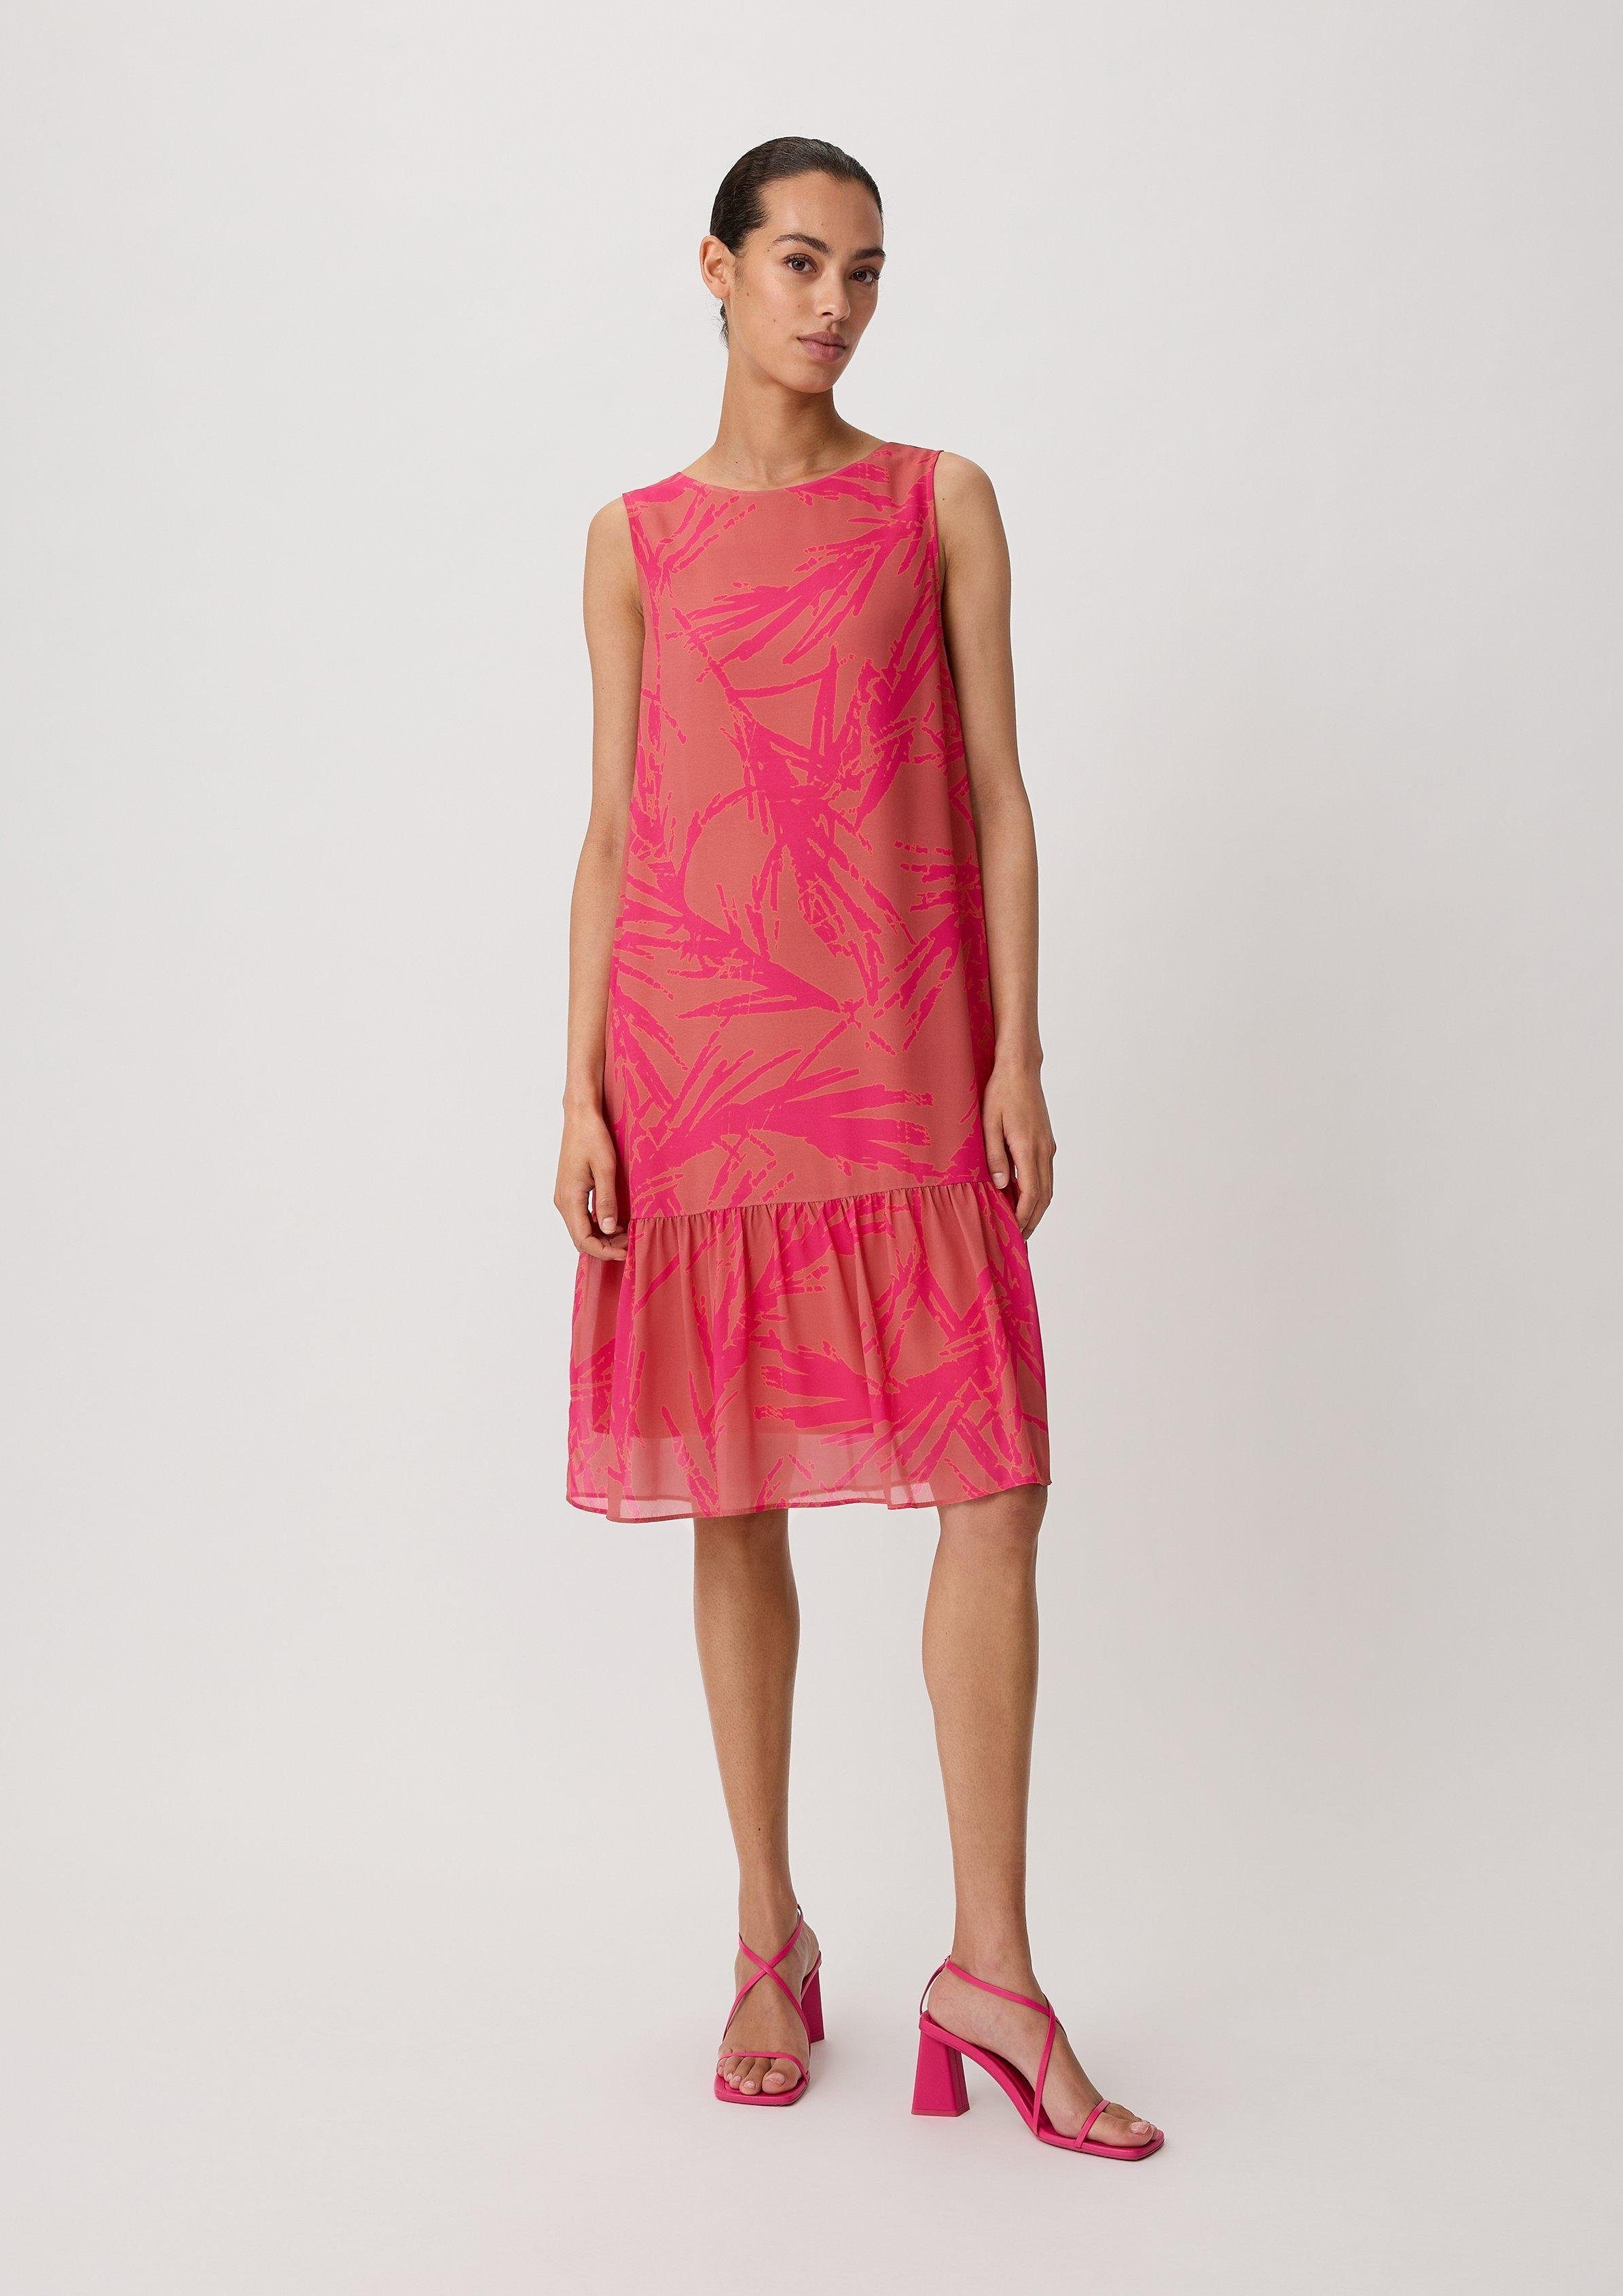 Comma Minikleid Stufenkleid aus Chiffon Volants pink